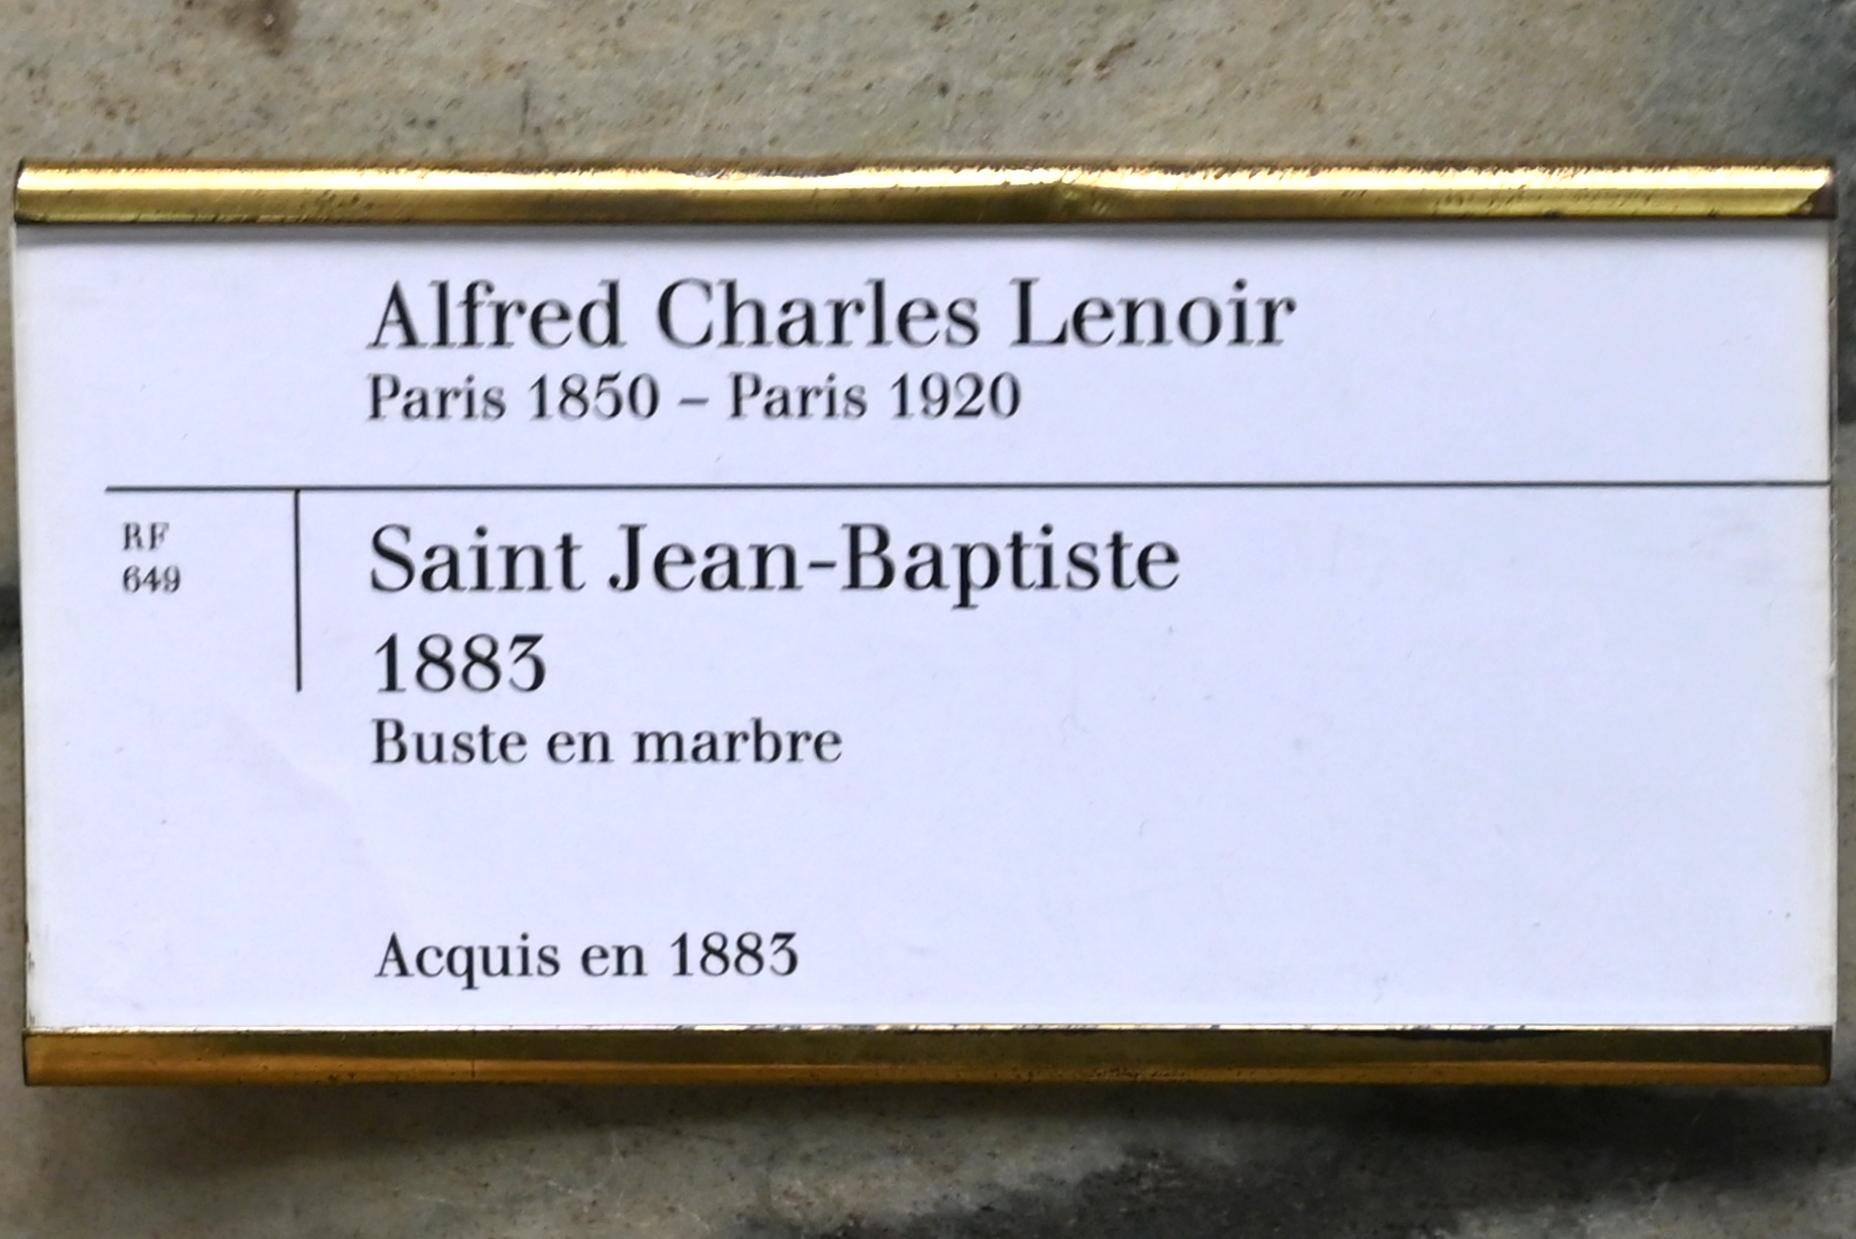 Alfred Charles Lenoir (1883), Johannes der Täufer, Paris, Musée d’Orsay, 1883, Bild 4/4